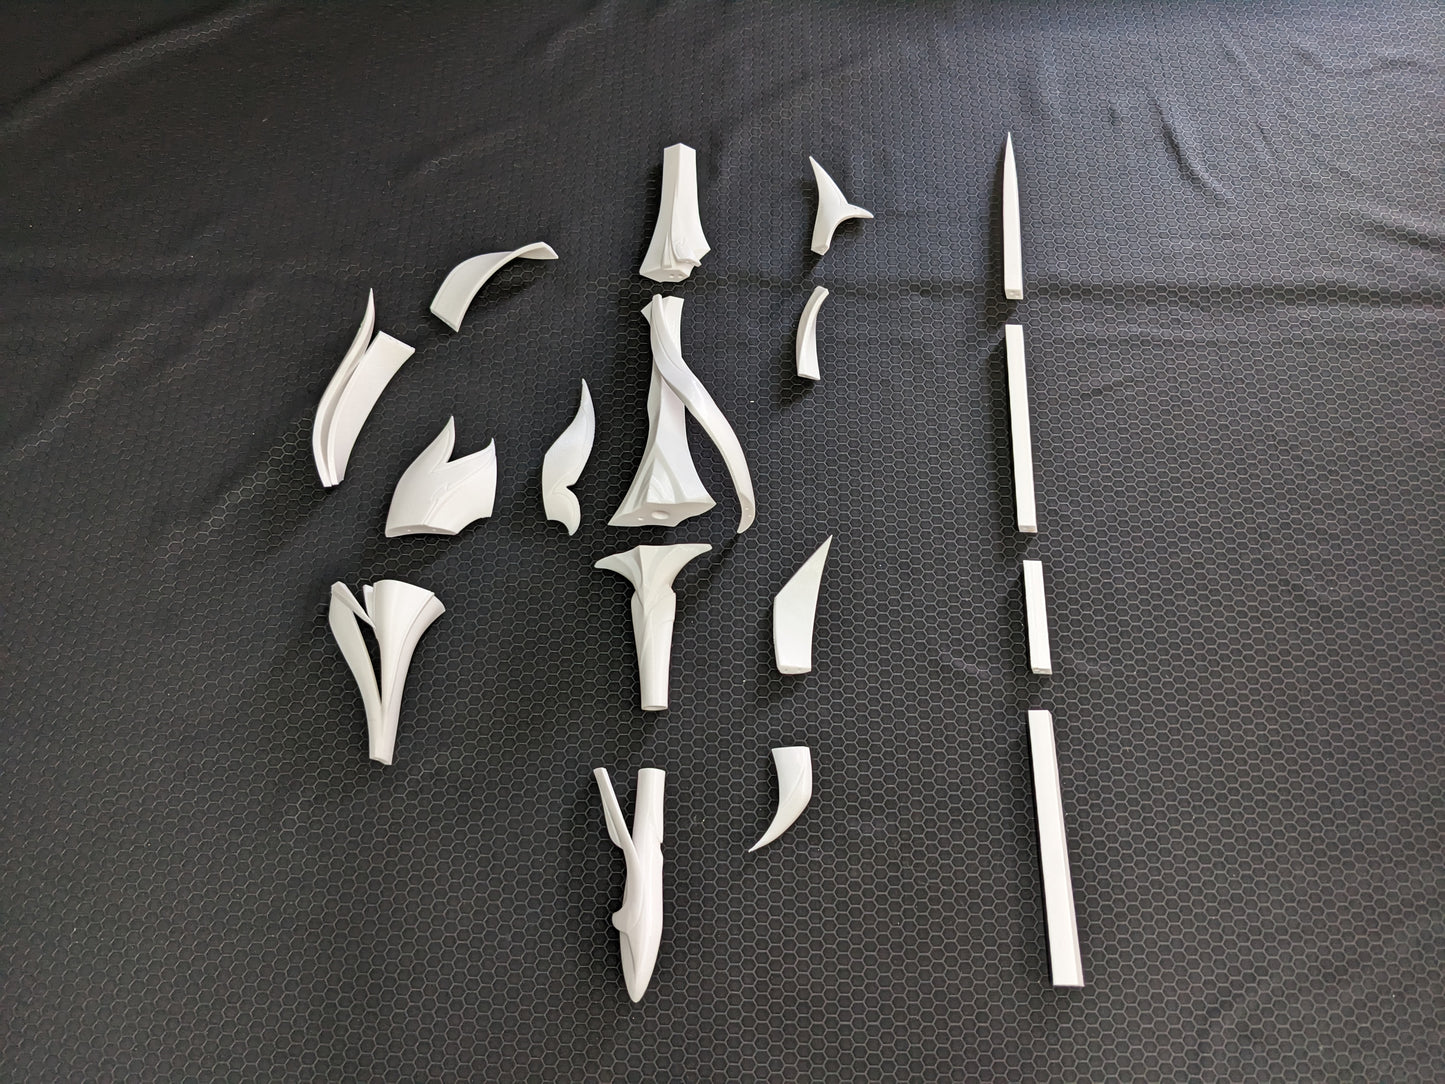 Luocha Rapier - Digital 3D Model Files and Physical 3D Printed Kit Options - Honkai: Star Rail Cosplay - Luocha Cosplay